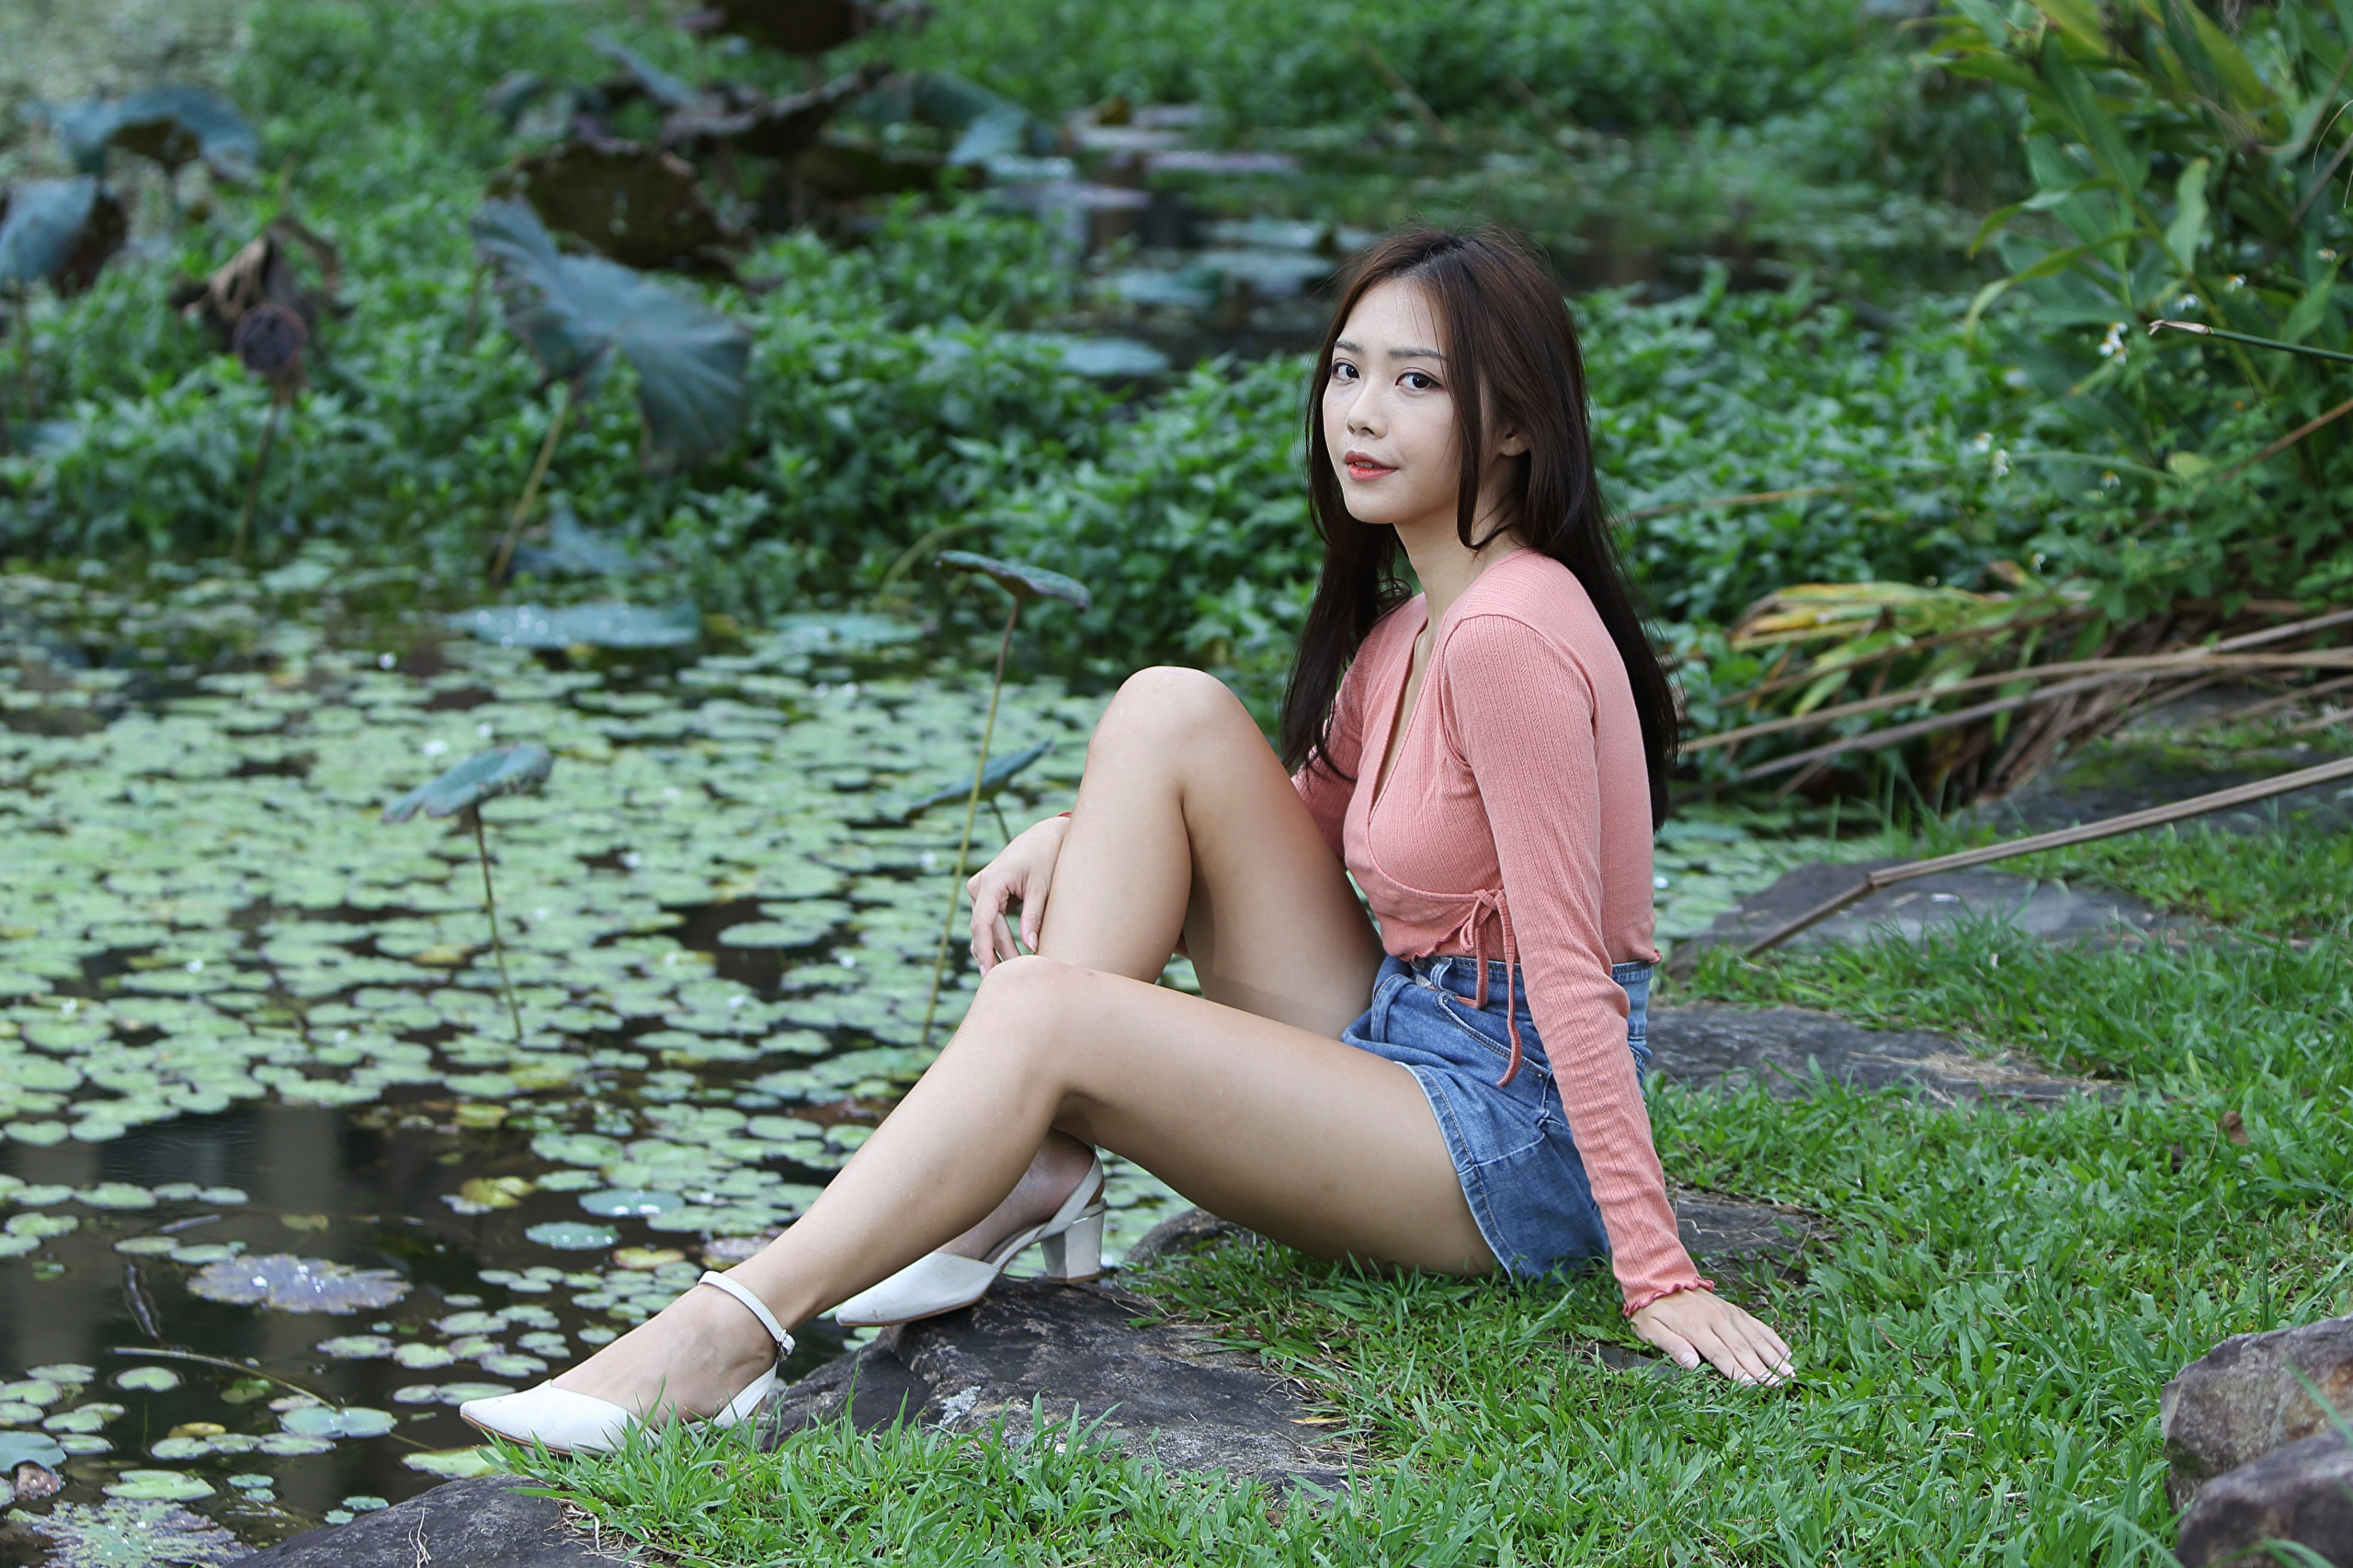 Asian Model Women Long Hair Dark Hair Sitting Jean Shorts Grass Depth Of Field Pond White Shoes Long 2560x1706